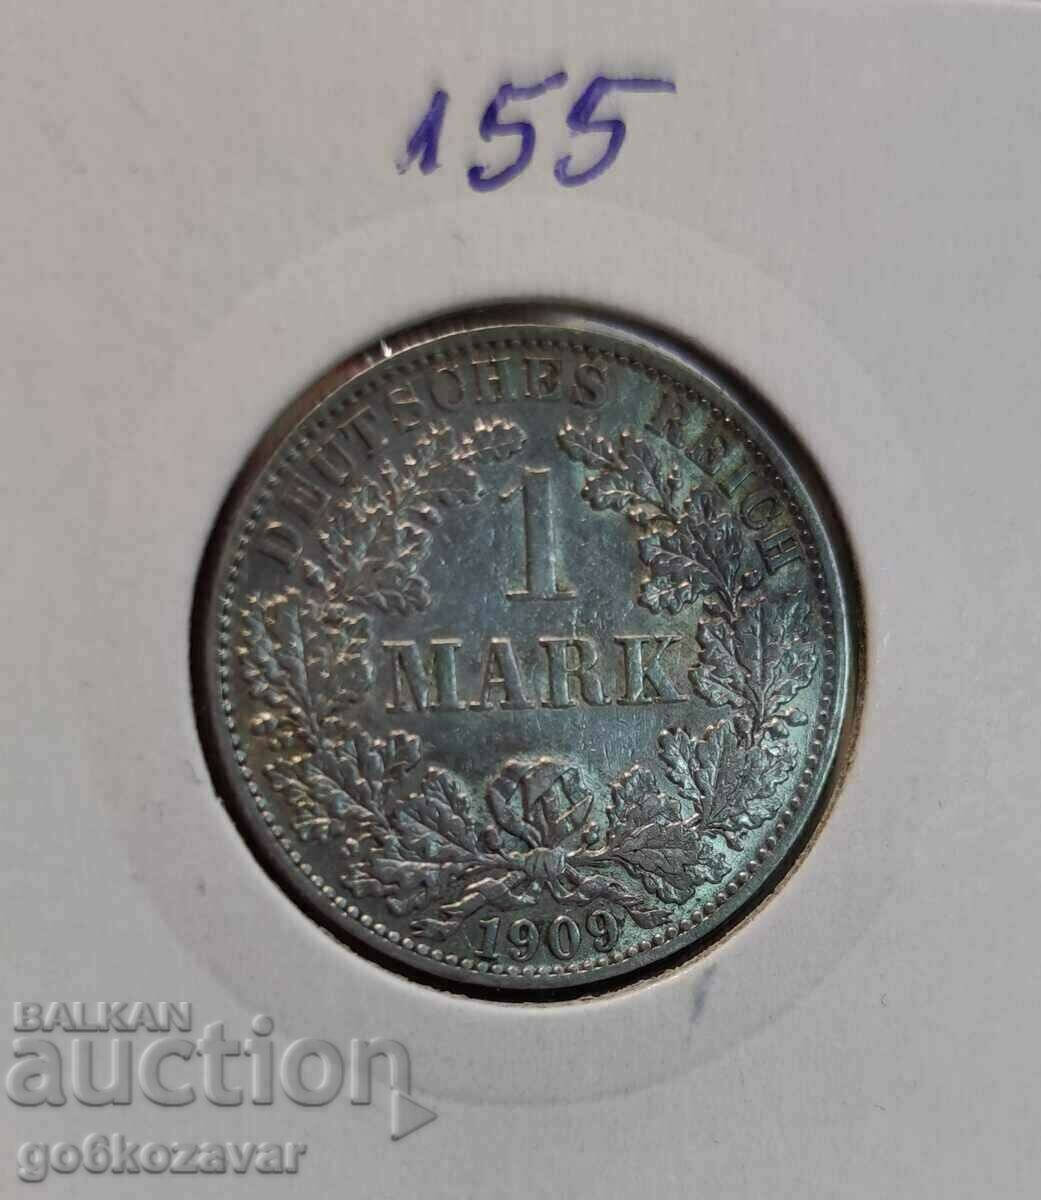 Germany 1 mark 1909 Silver! A